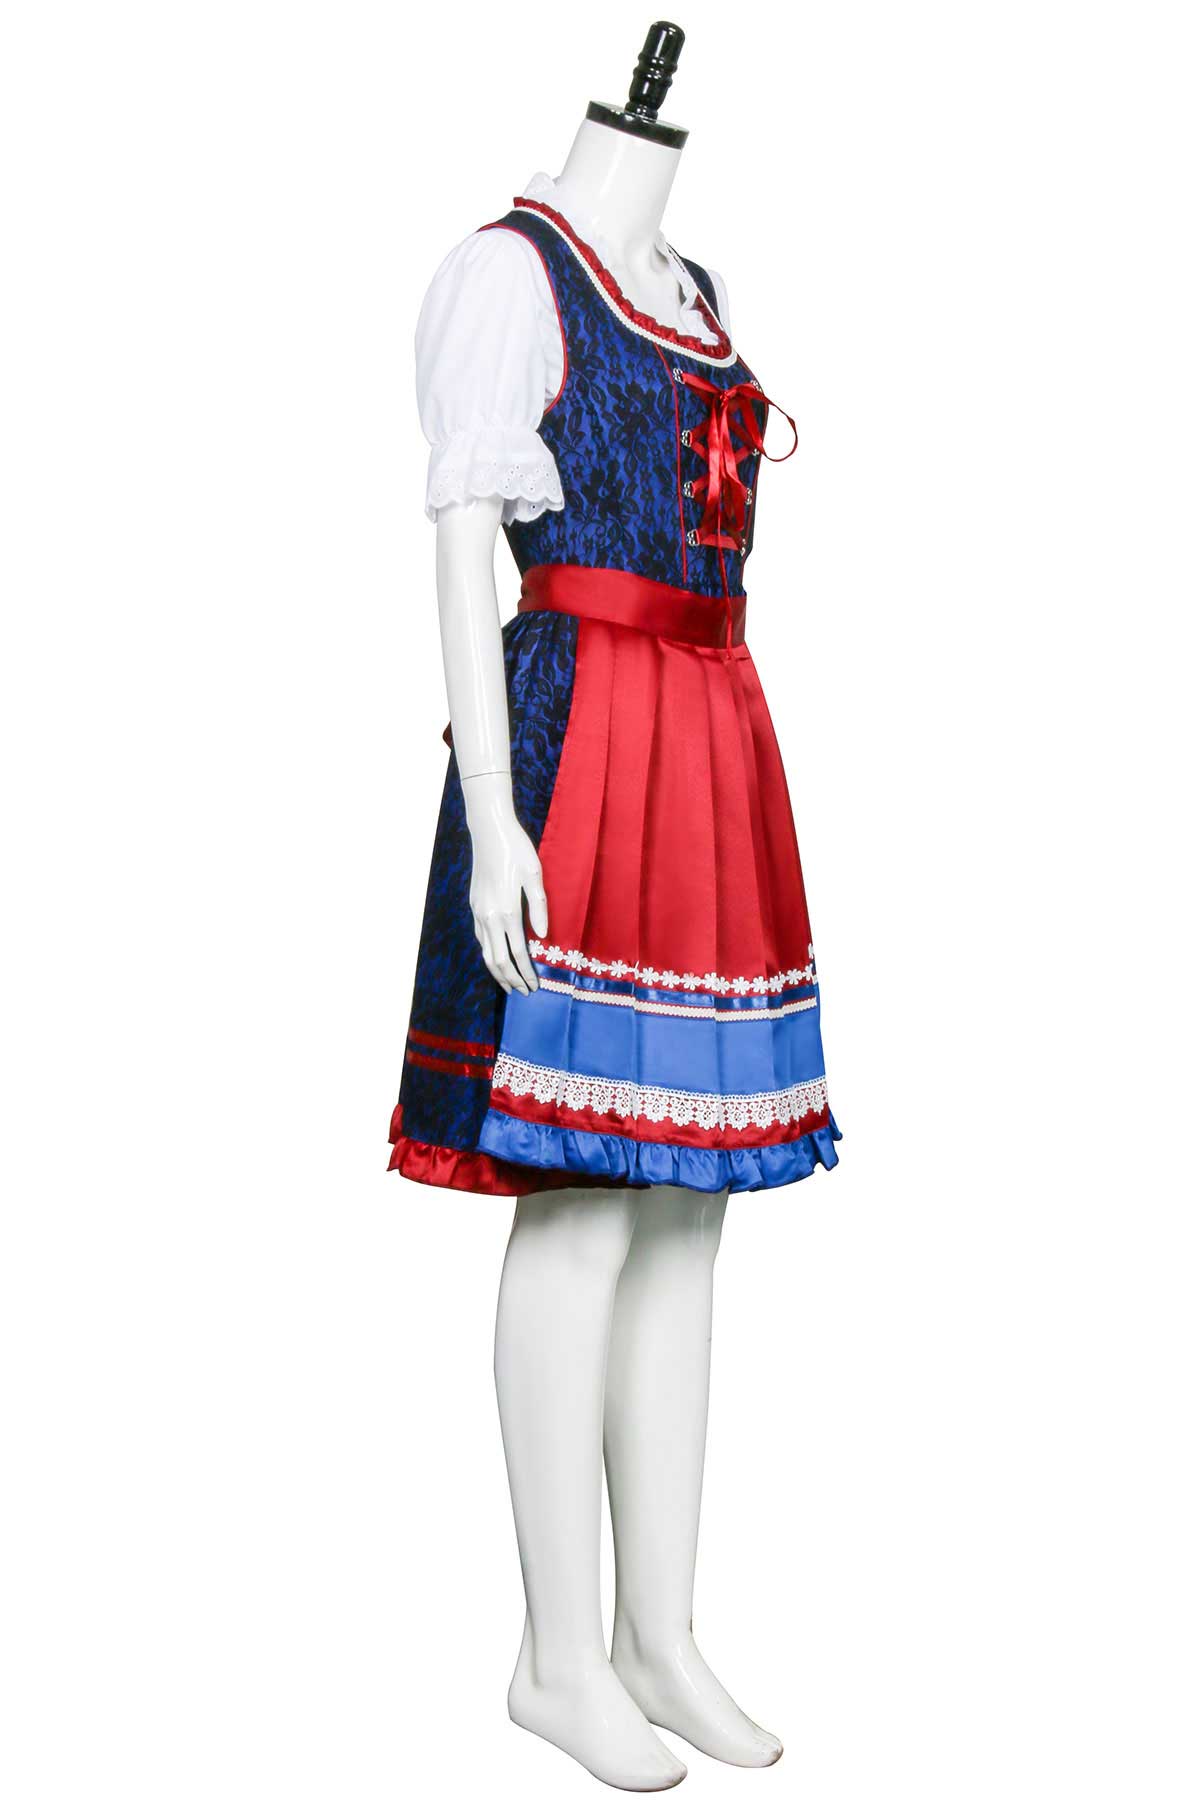 Alemania Oktoberfest Women Bear Disfraz French Maid Outfits Bavarian Dirndl Carnival Festival Fancy Dress